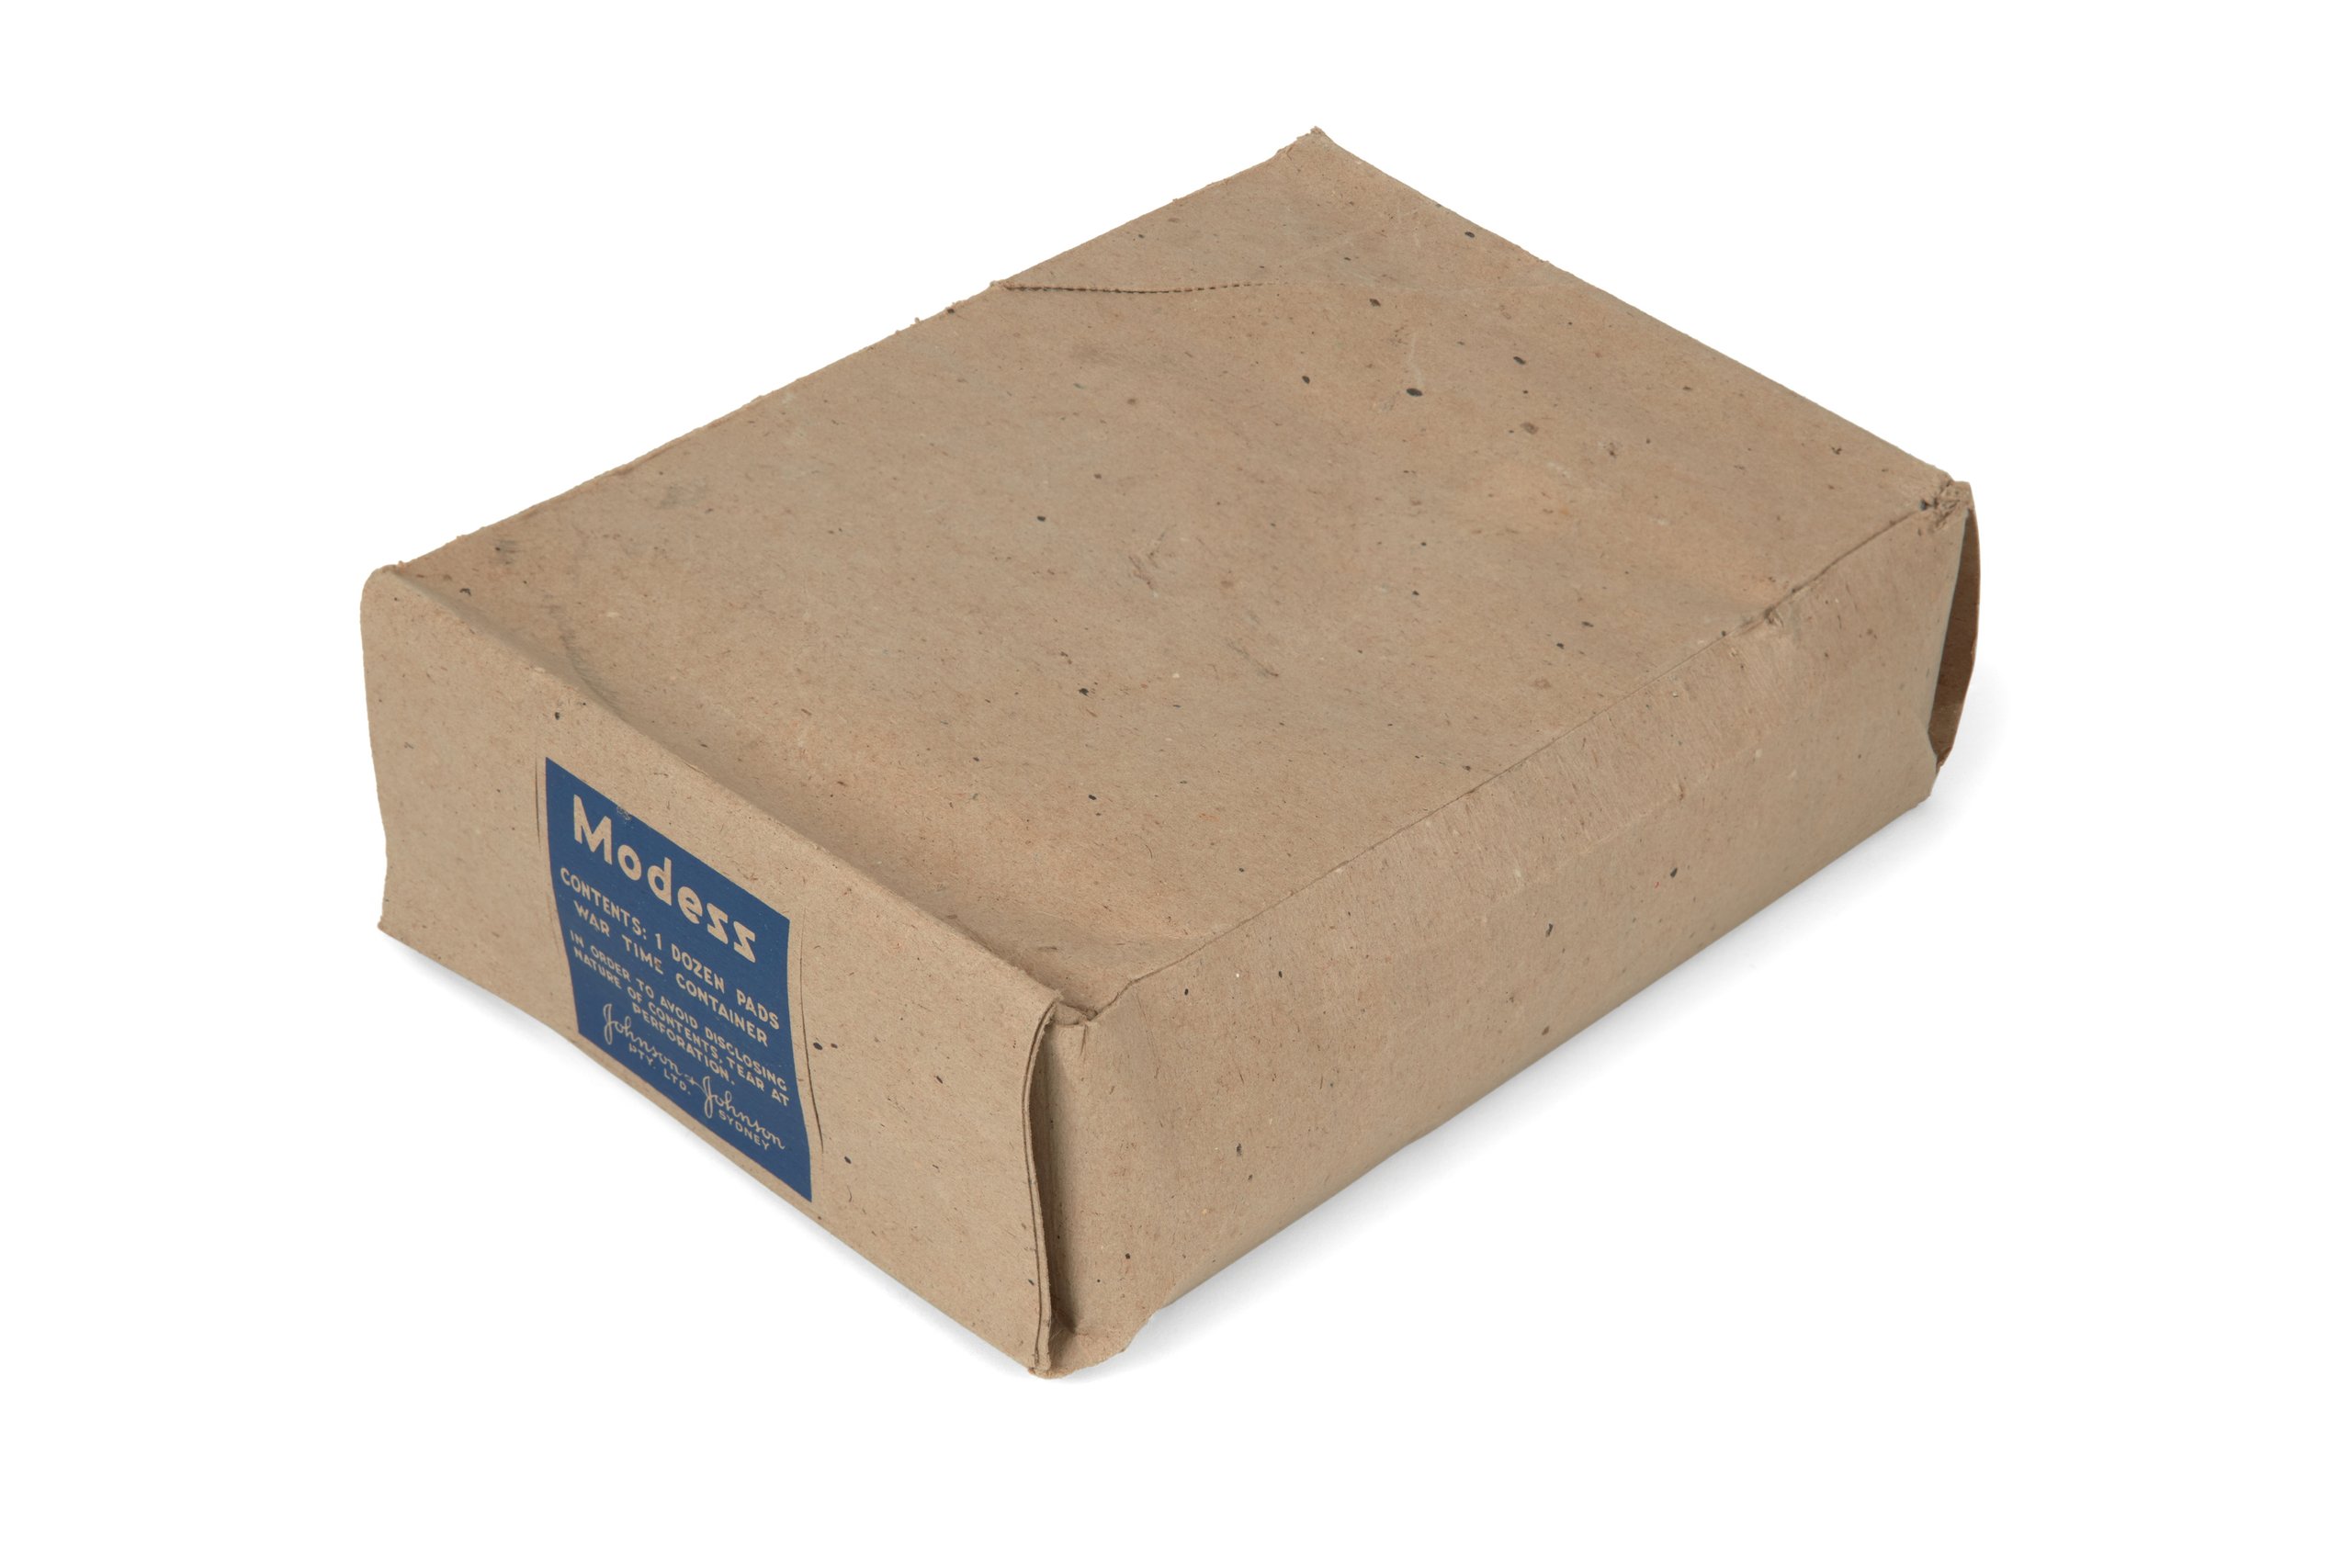 Box of 'Modess' sanitary pads by Johnson & Johnson Pty Ltd